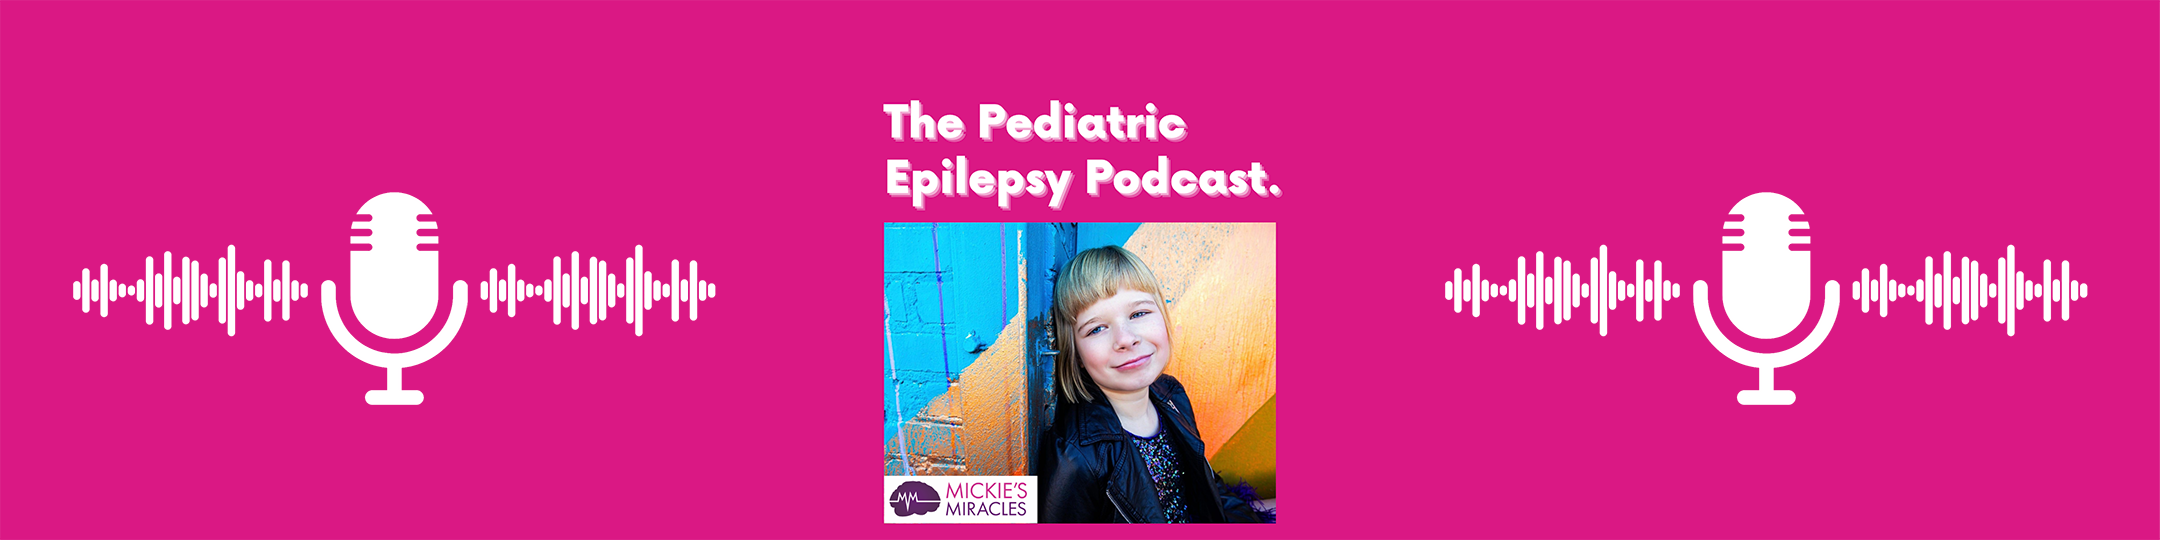 The Pediatric Epilepsy Podcast